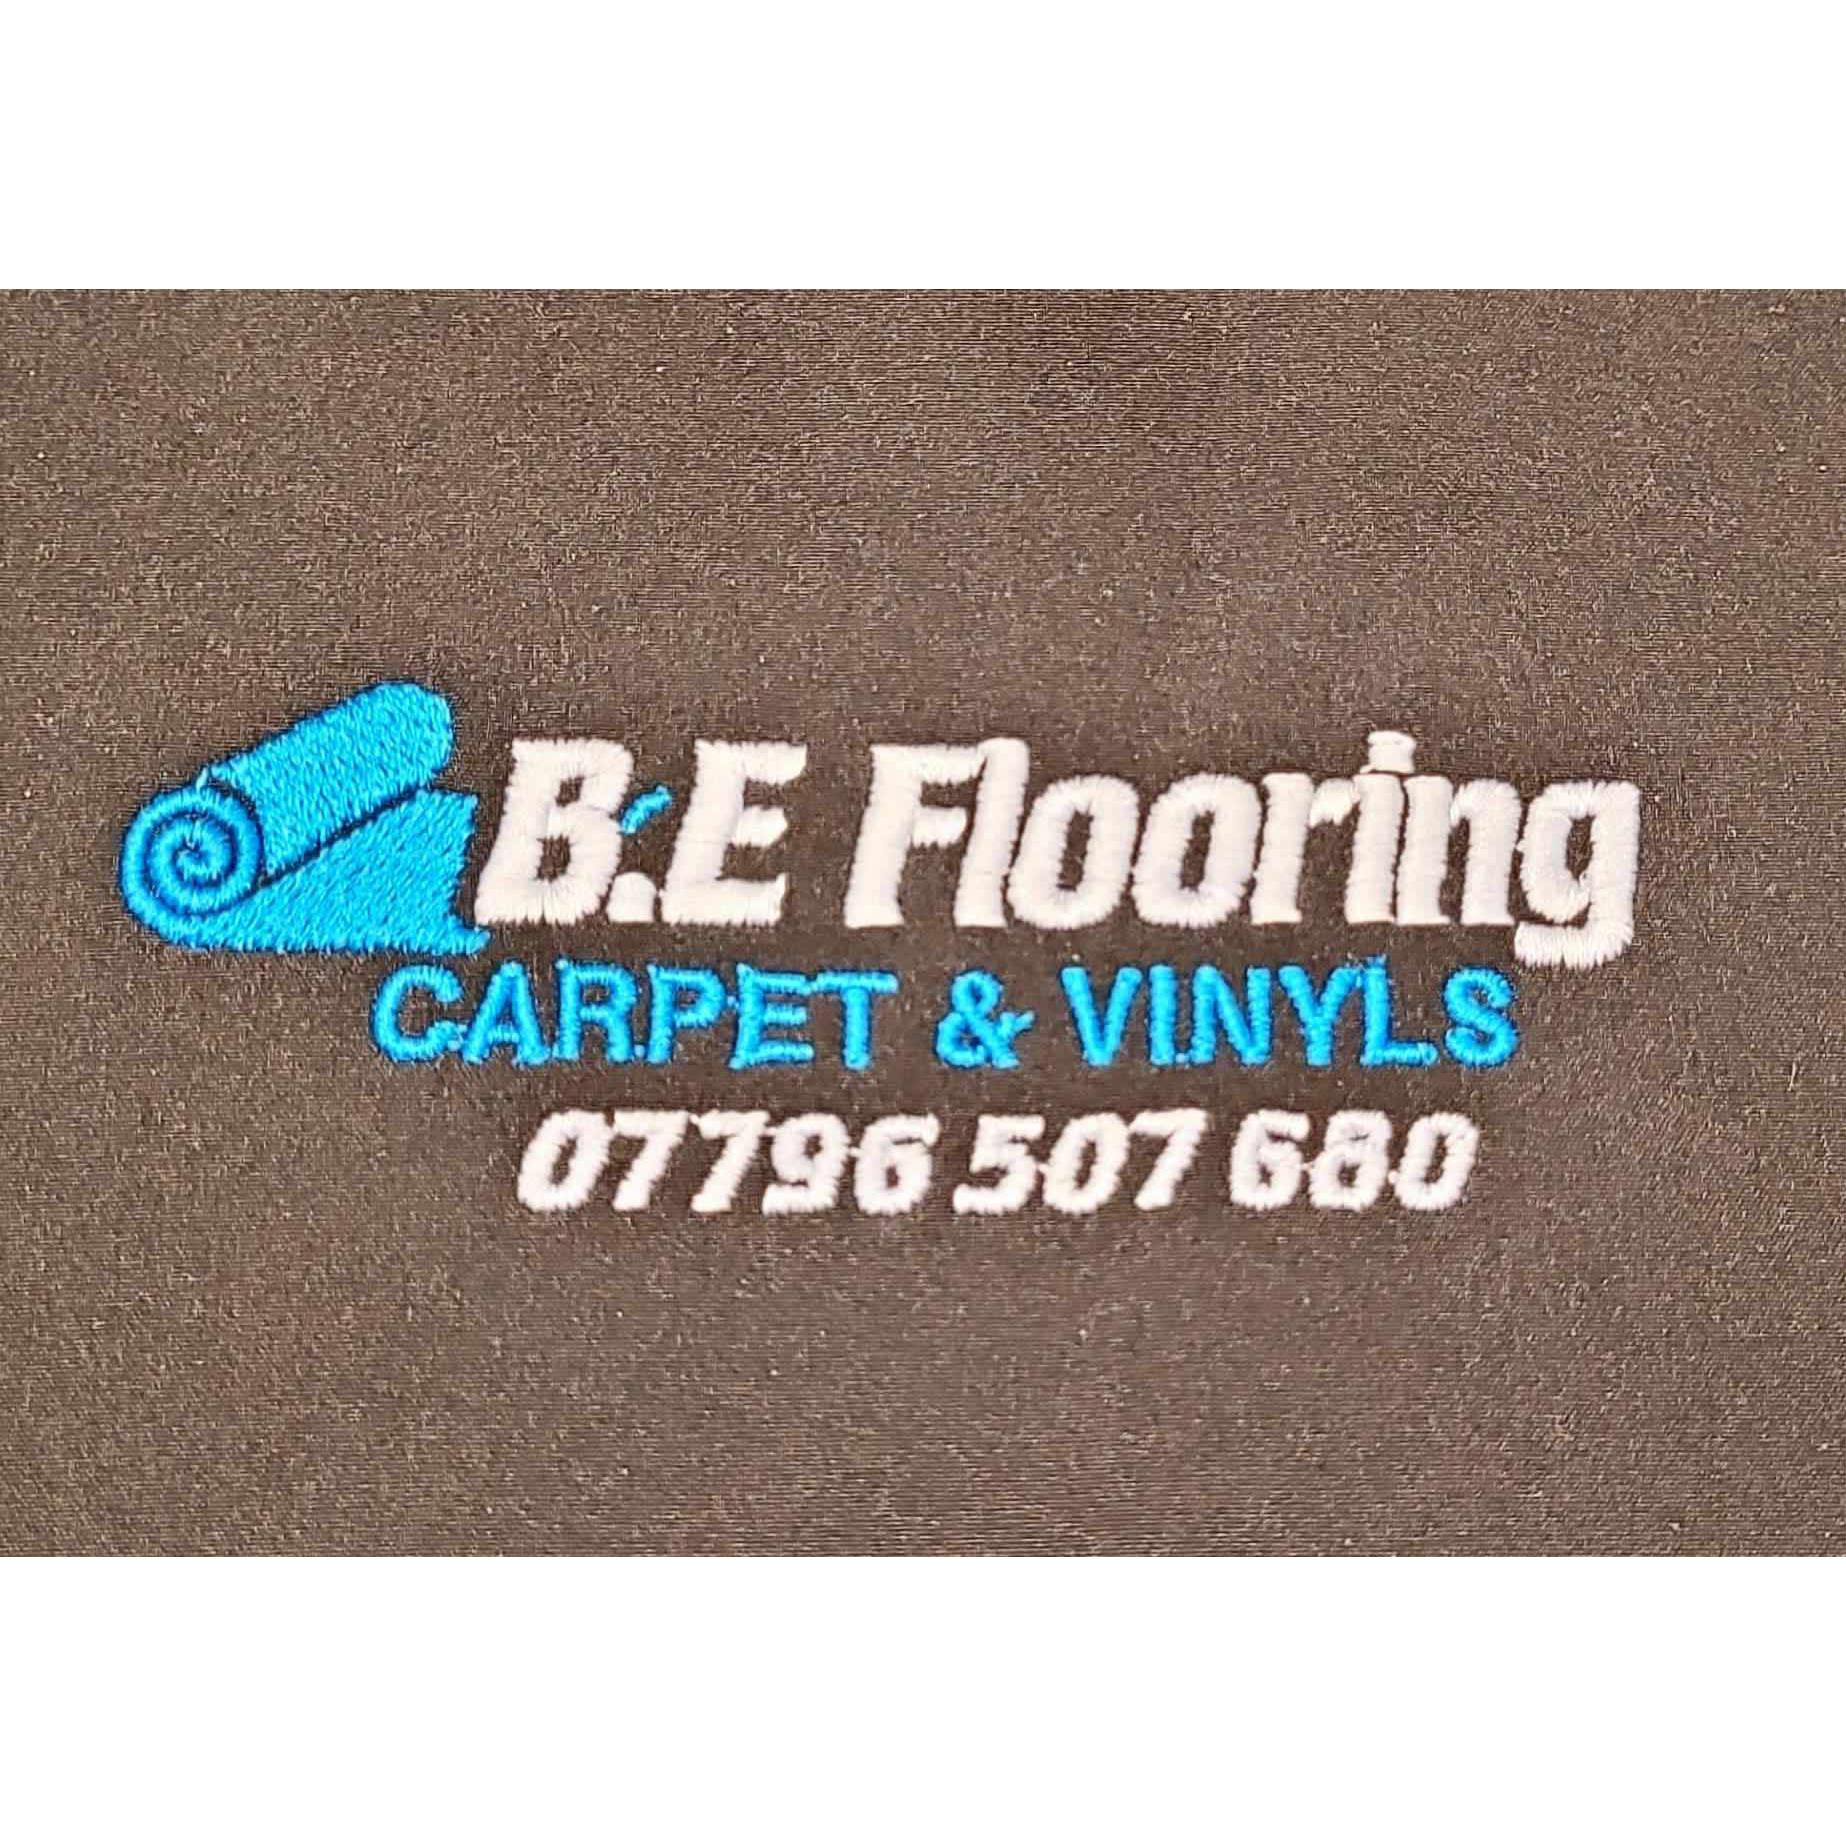 LOGO B.E Flooring Ballymena 07796 507680